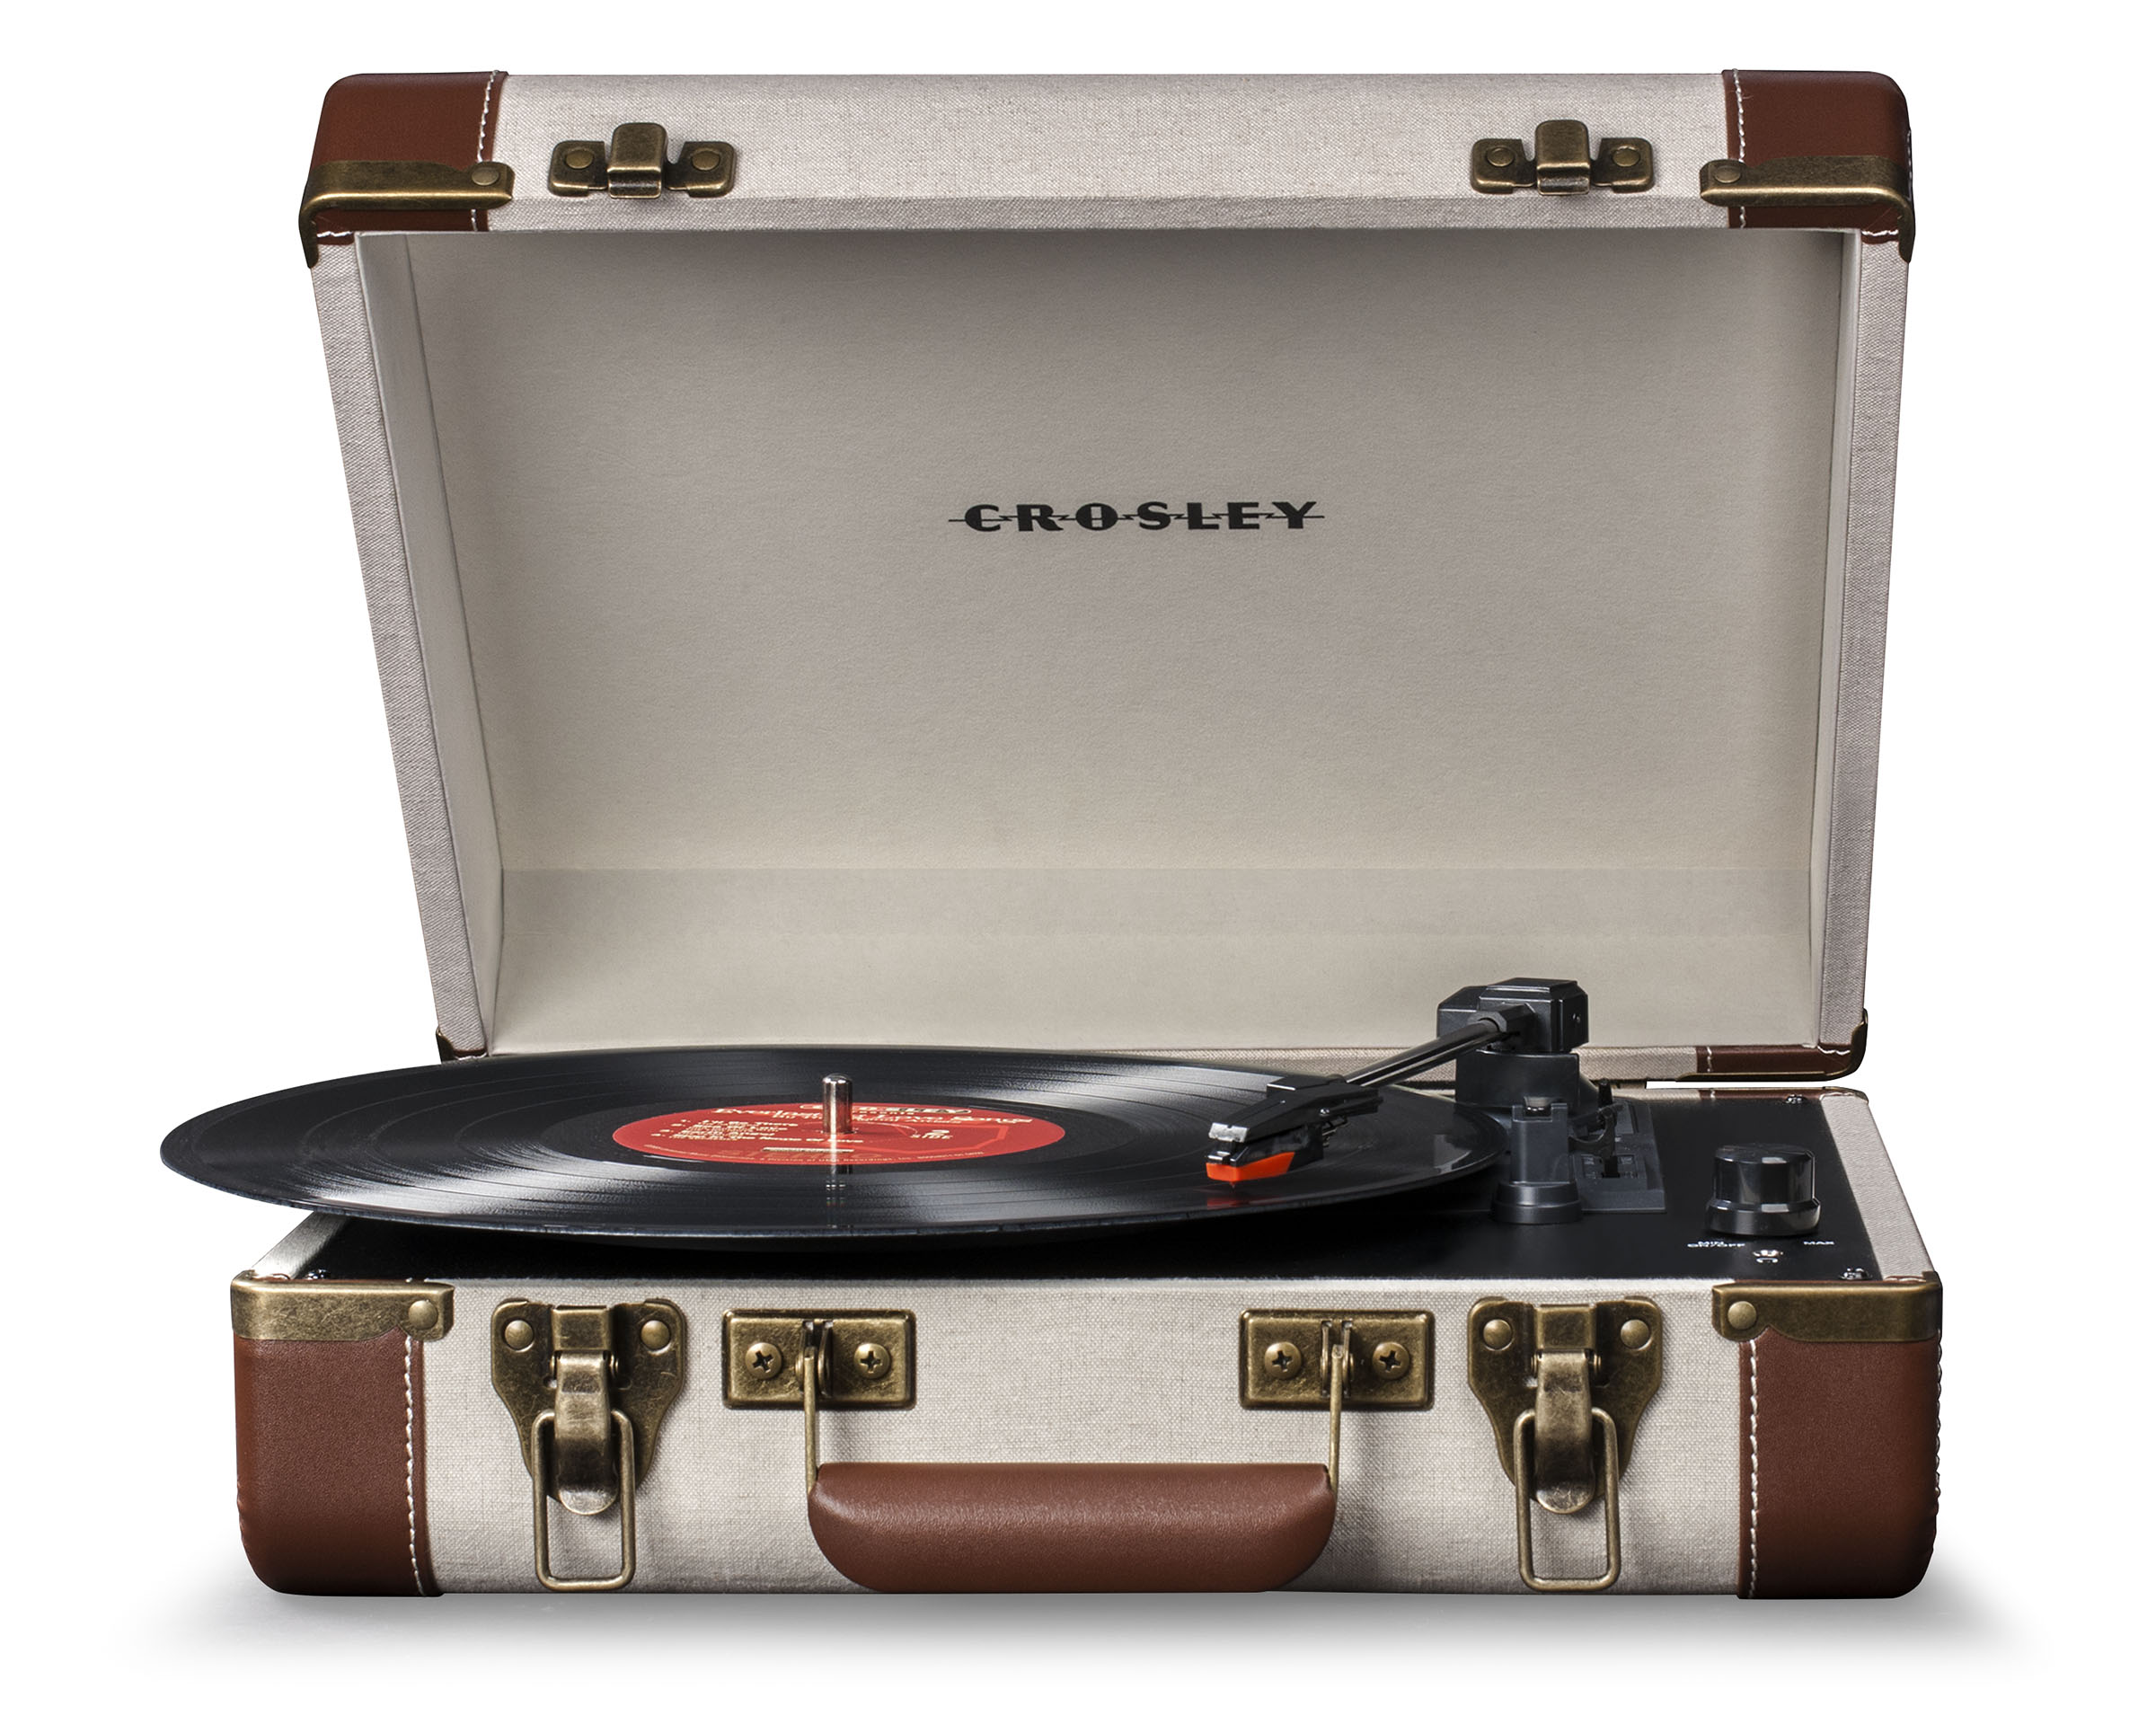 Crosley record player sale